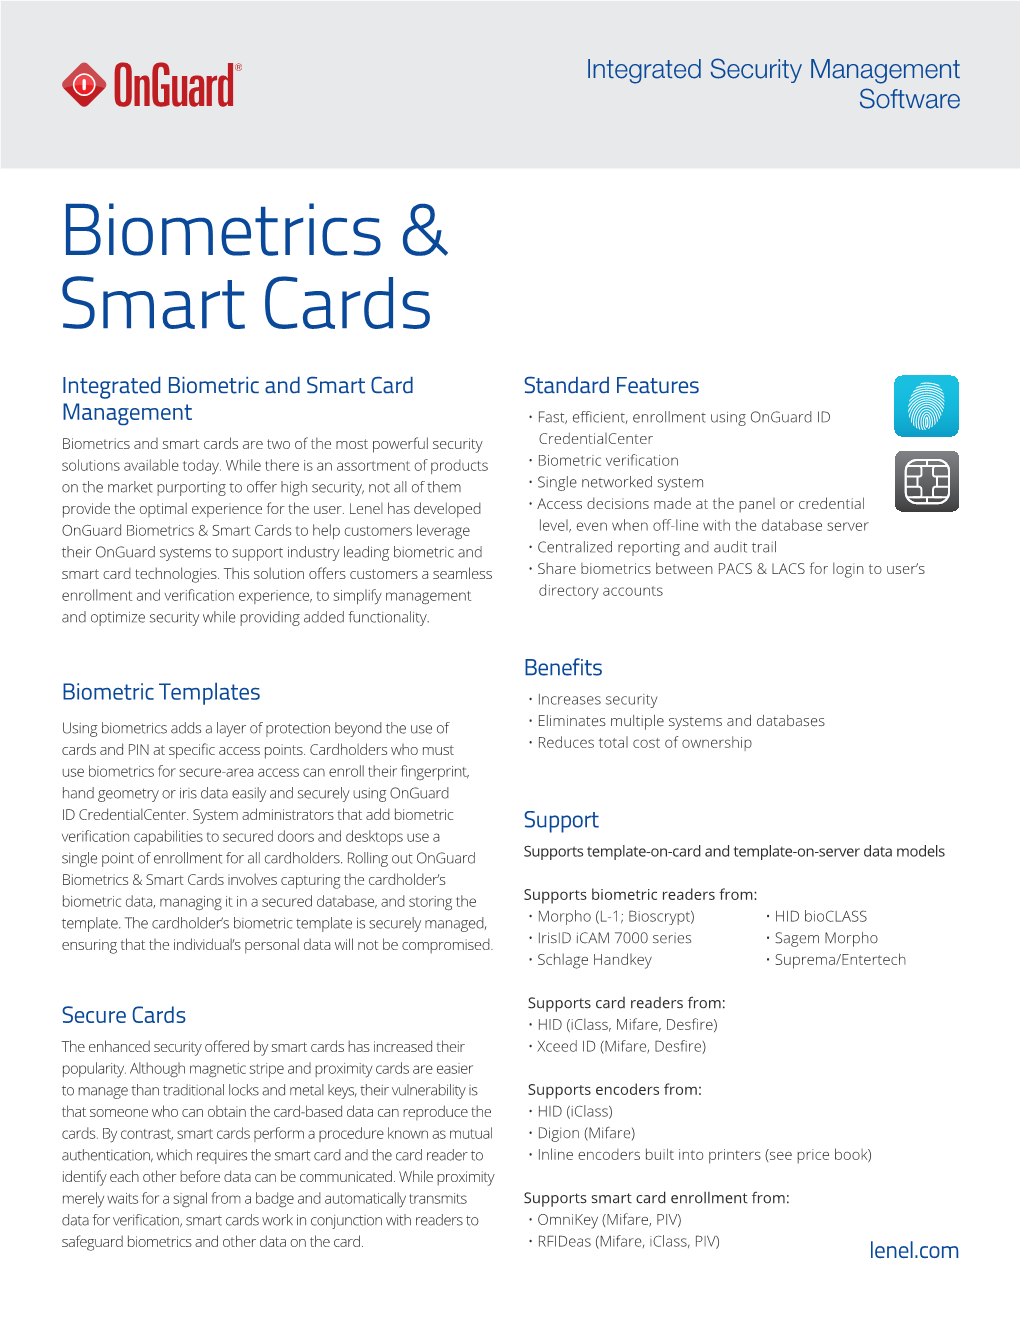 Onguard Biometric & Smart Cards Data Sheet